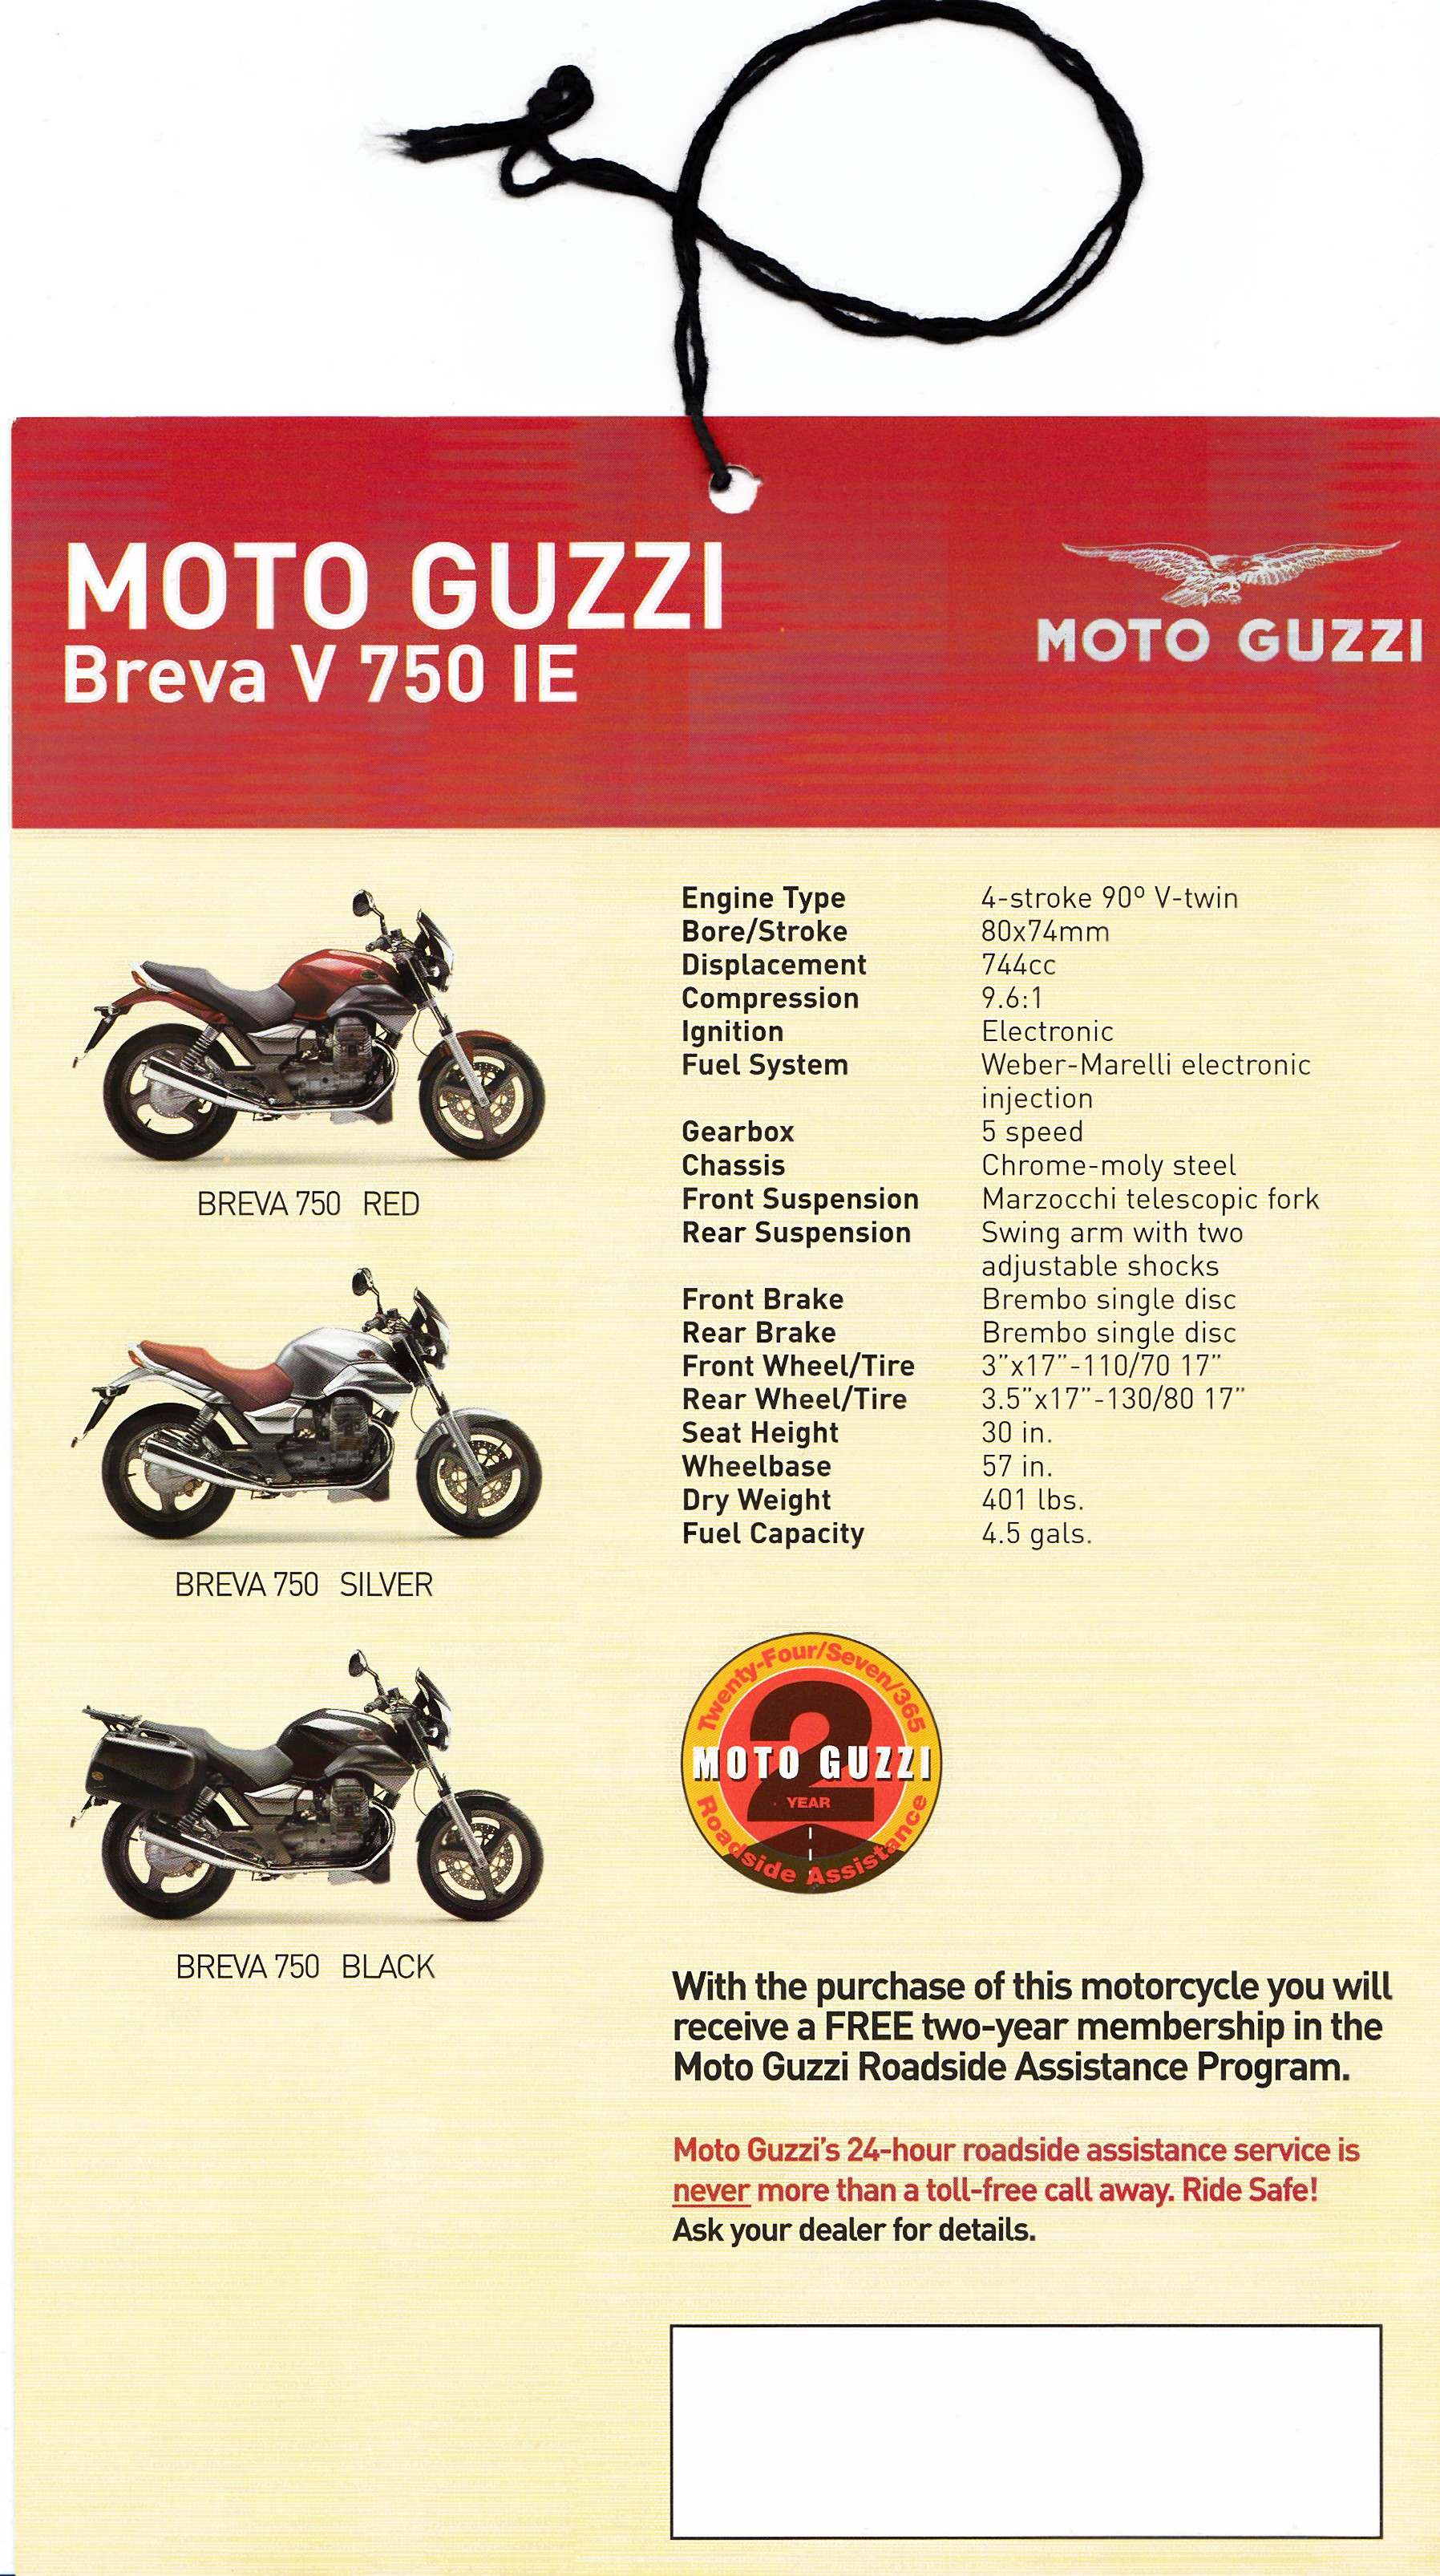 Tag - Moto Guzzi Breva V 750 IE